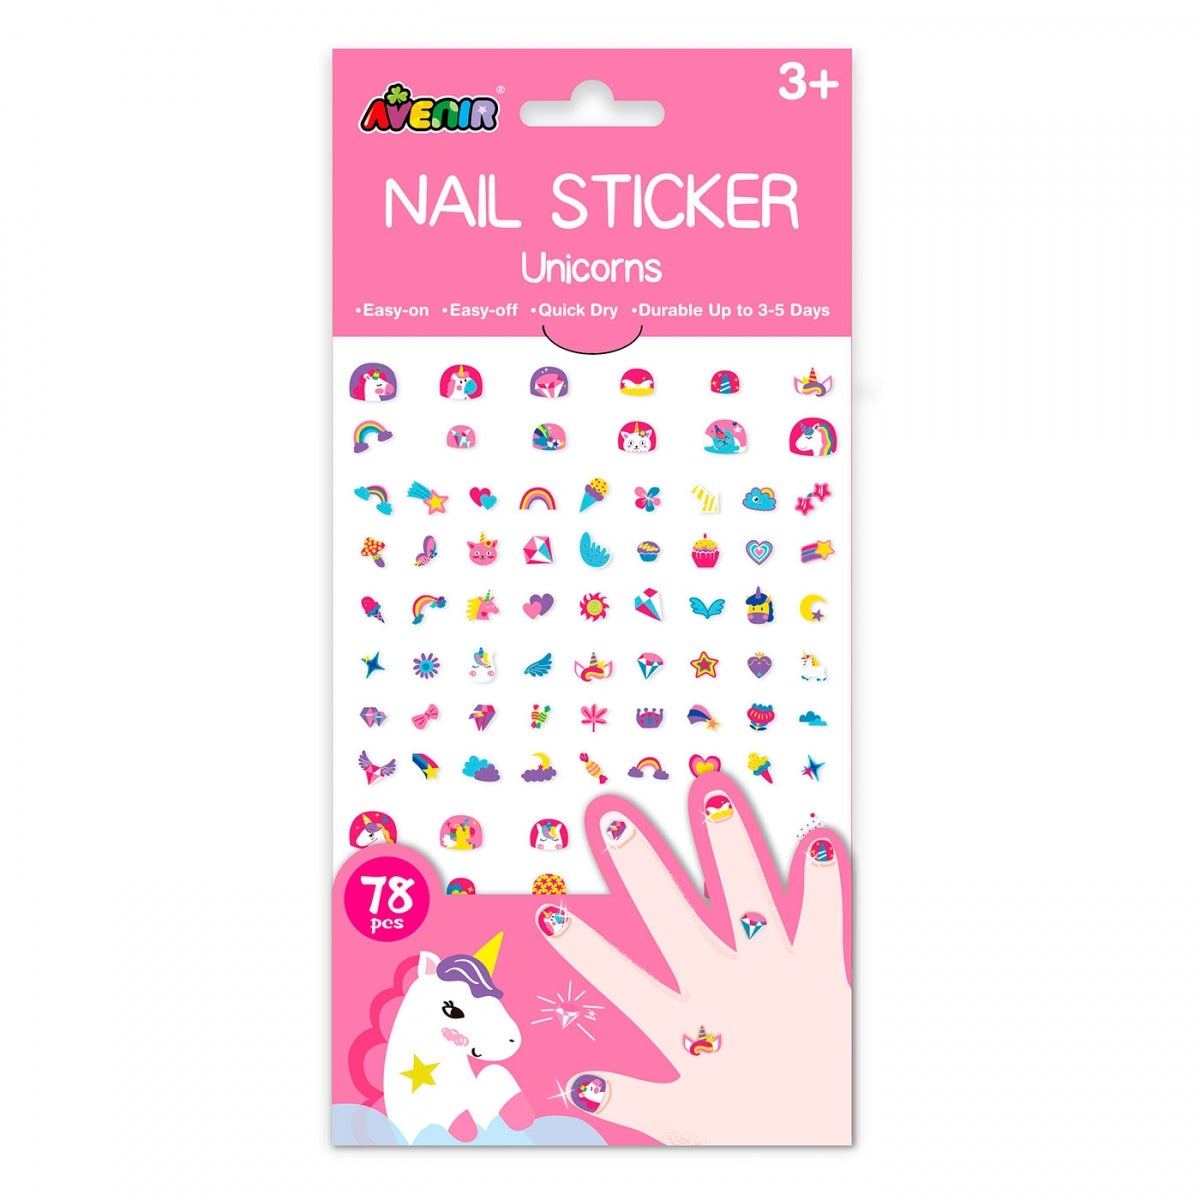 Nail Stickers - 78 Pieces by Avenir-DAM Good Ideas-Little Giant Kidz